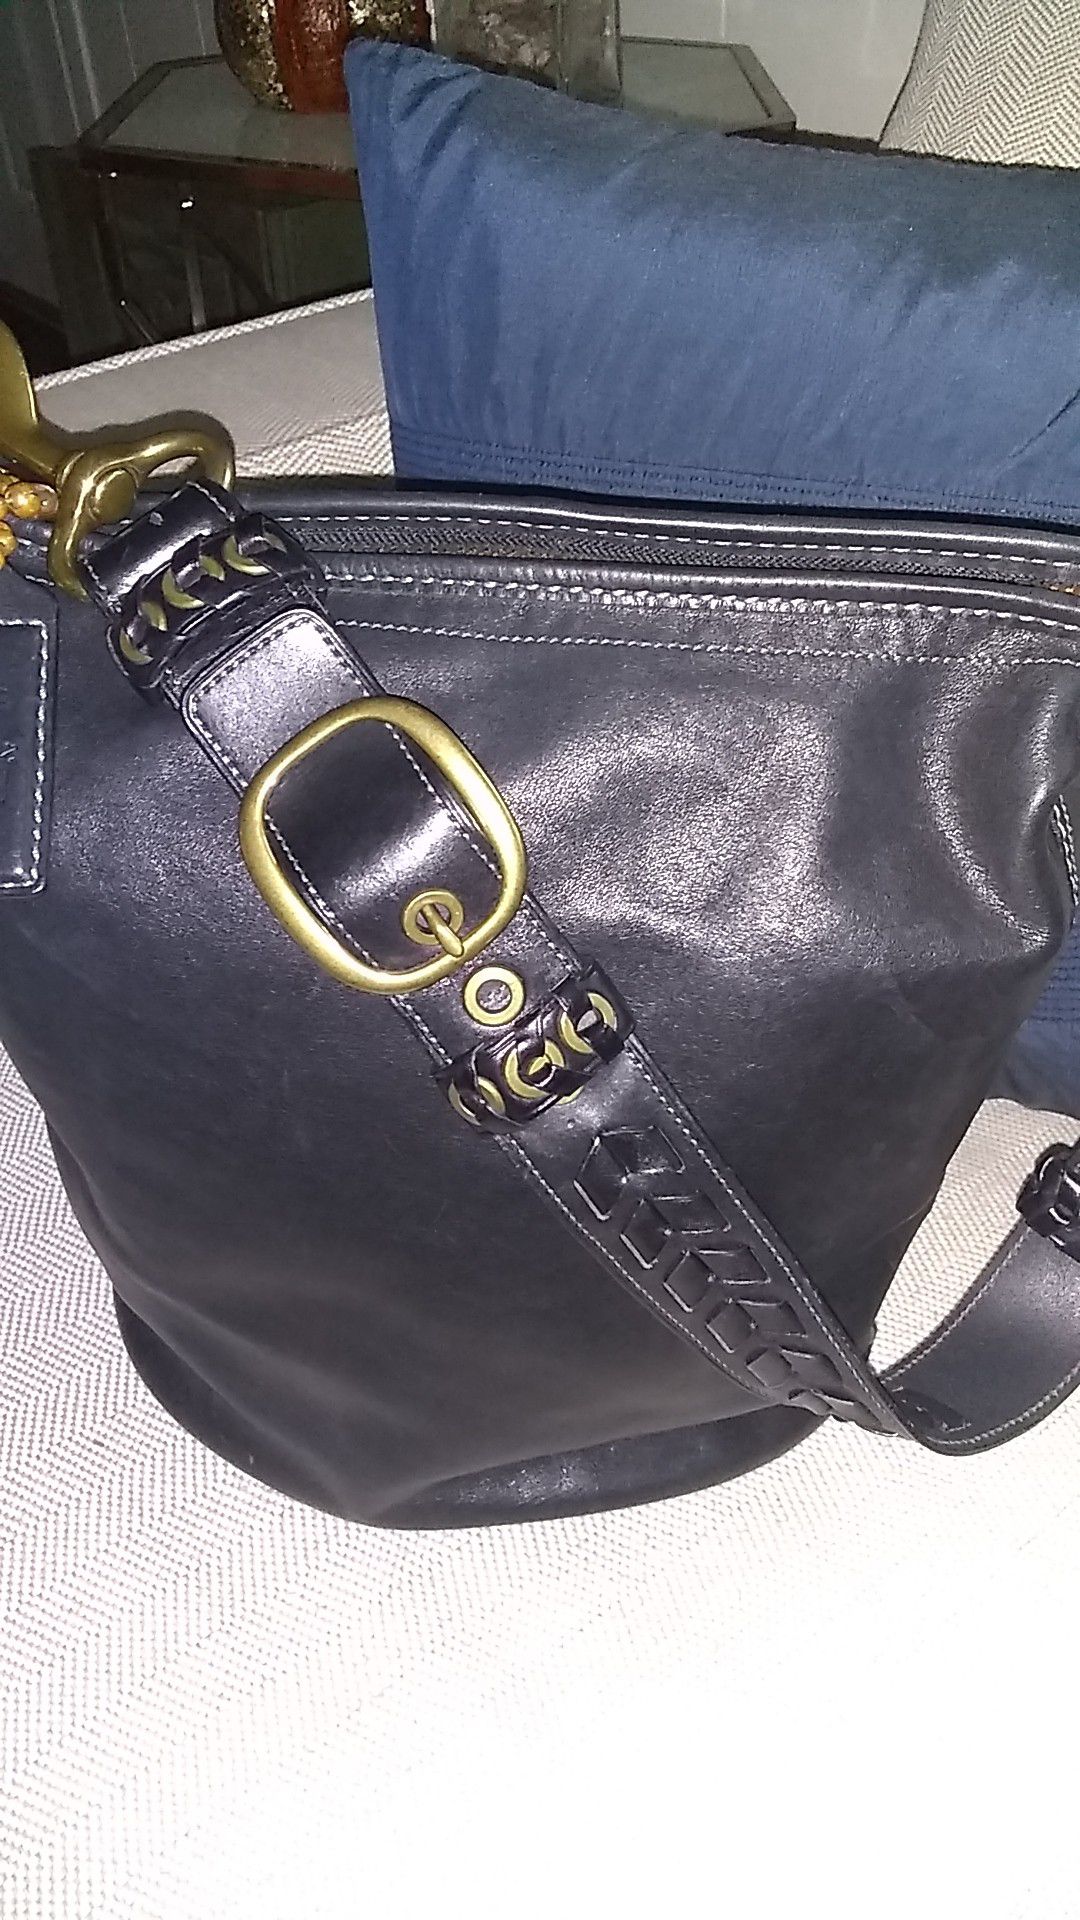 Authentic black coach handbag